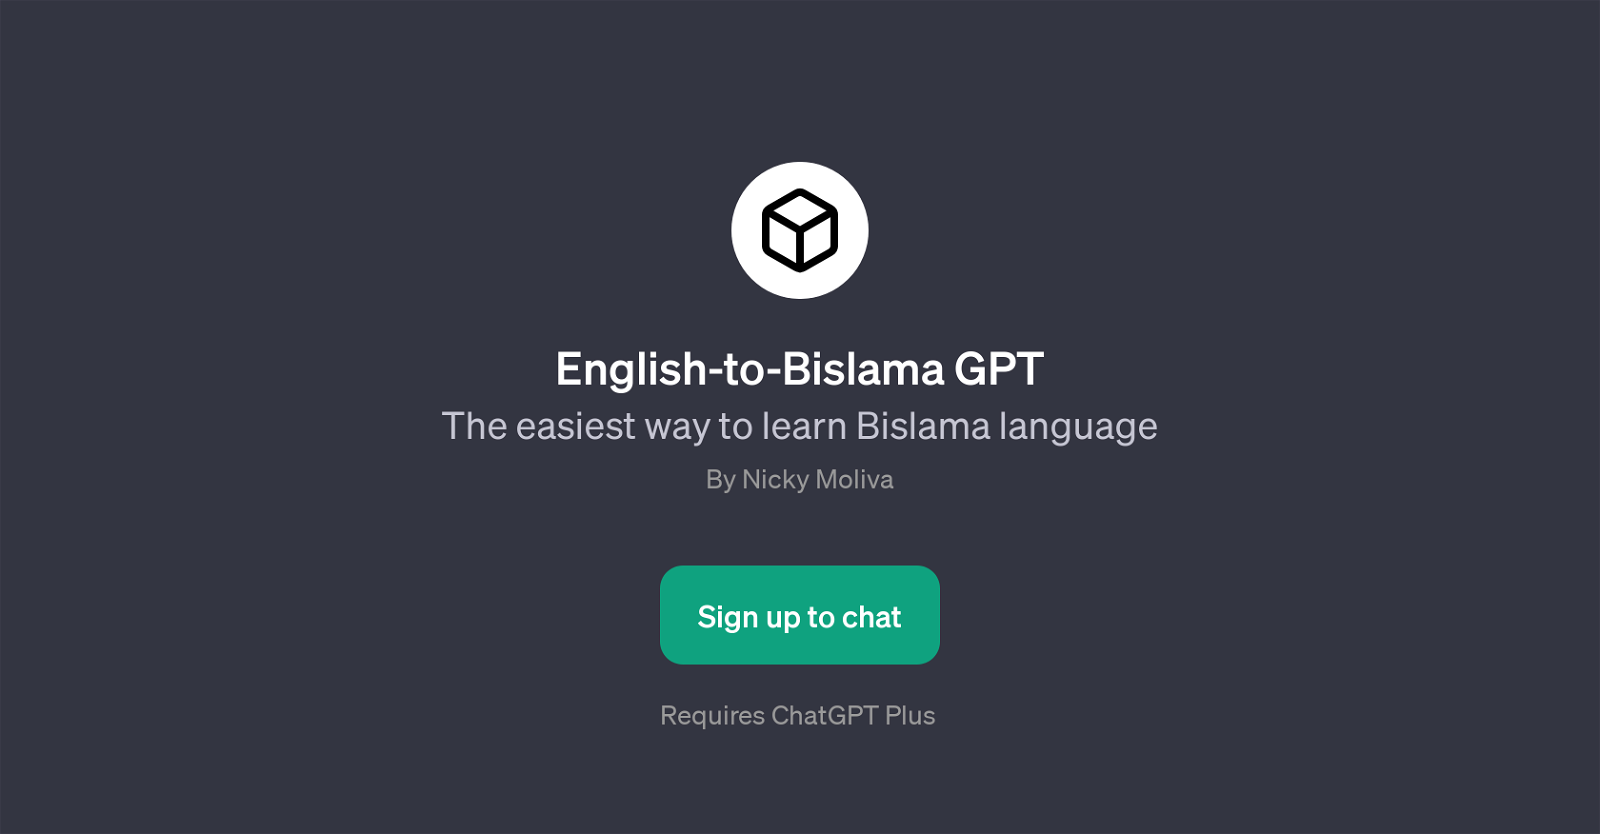 English-to-Bislama GPT website